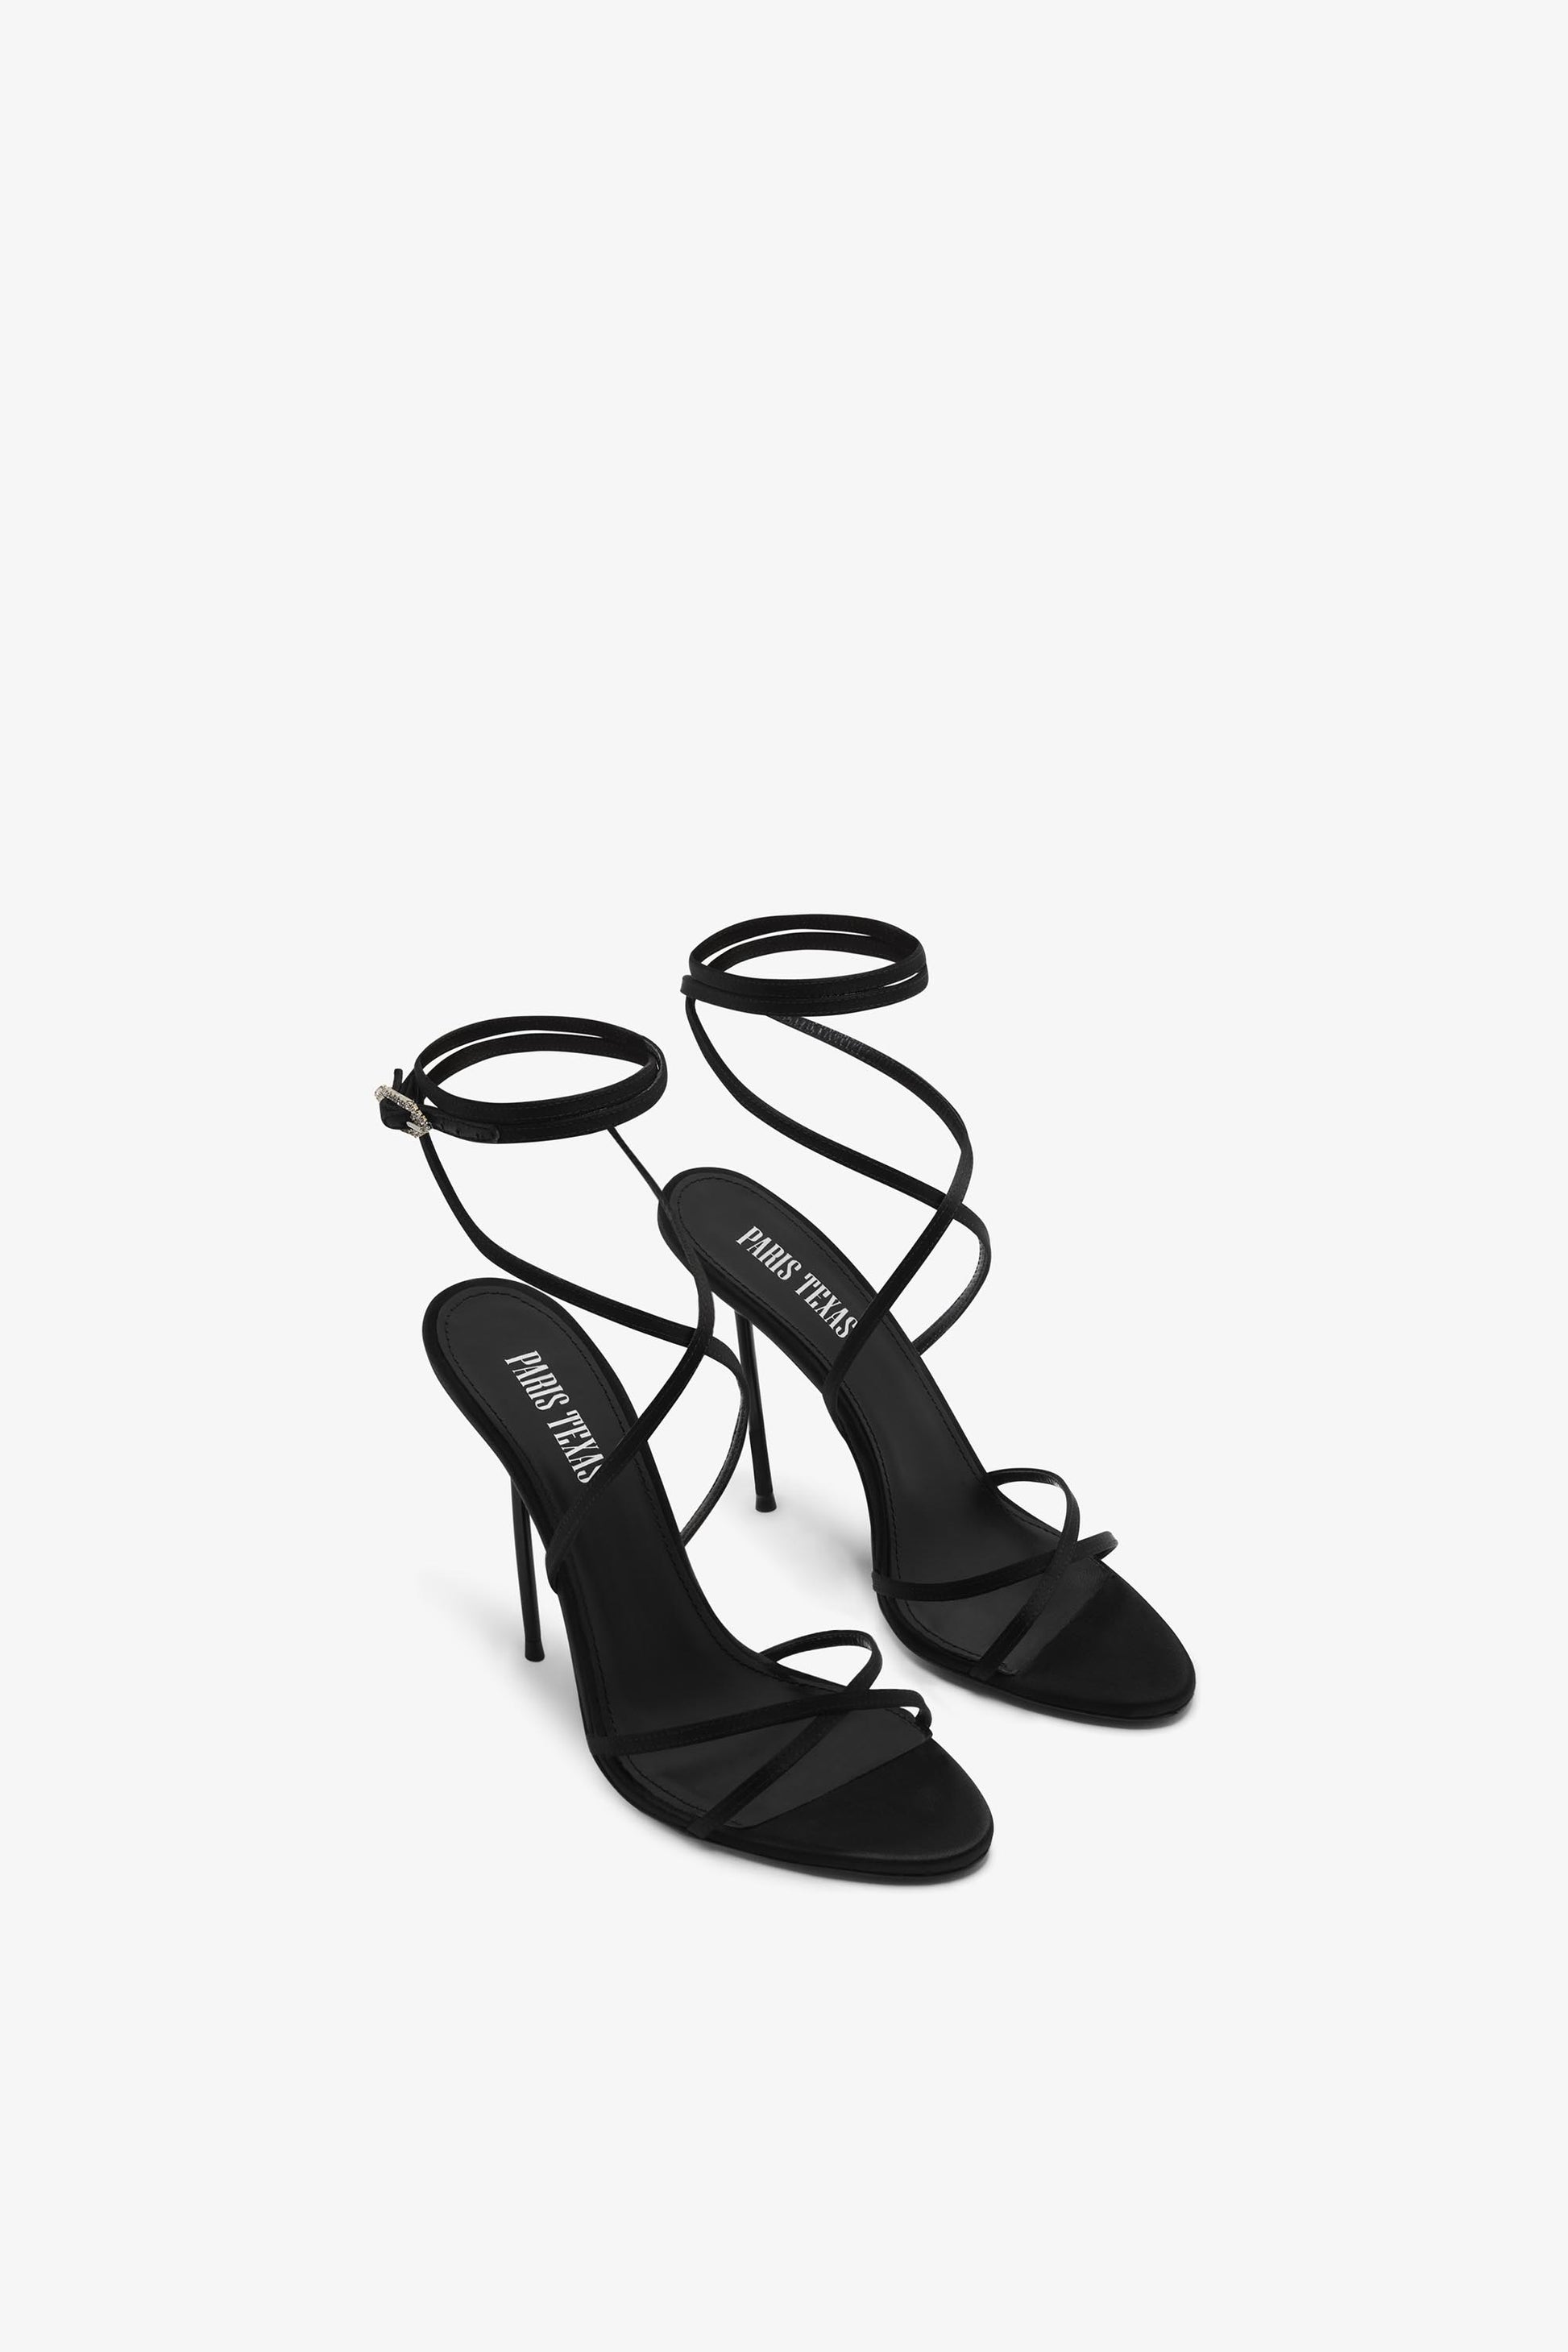 Lace-up satin sandal in black